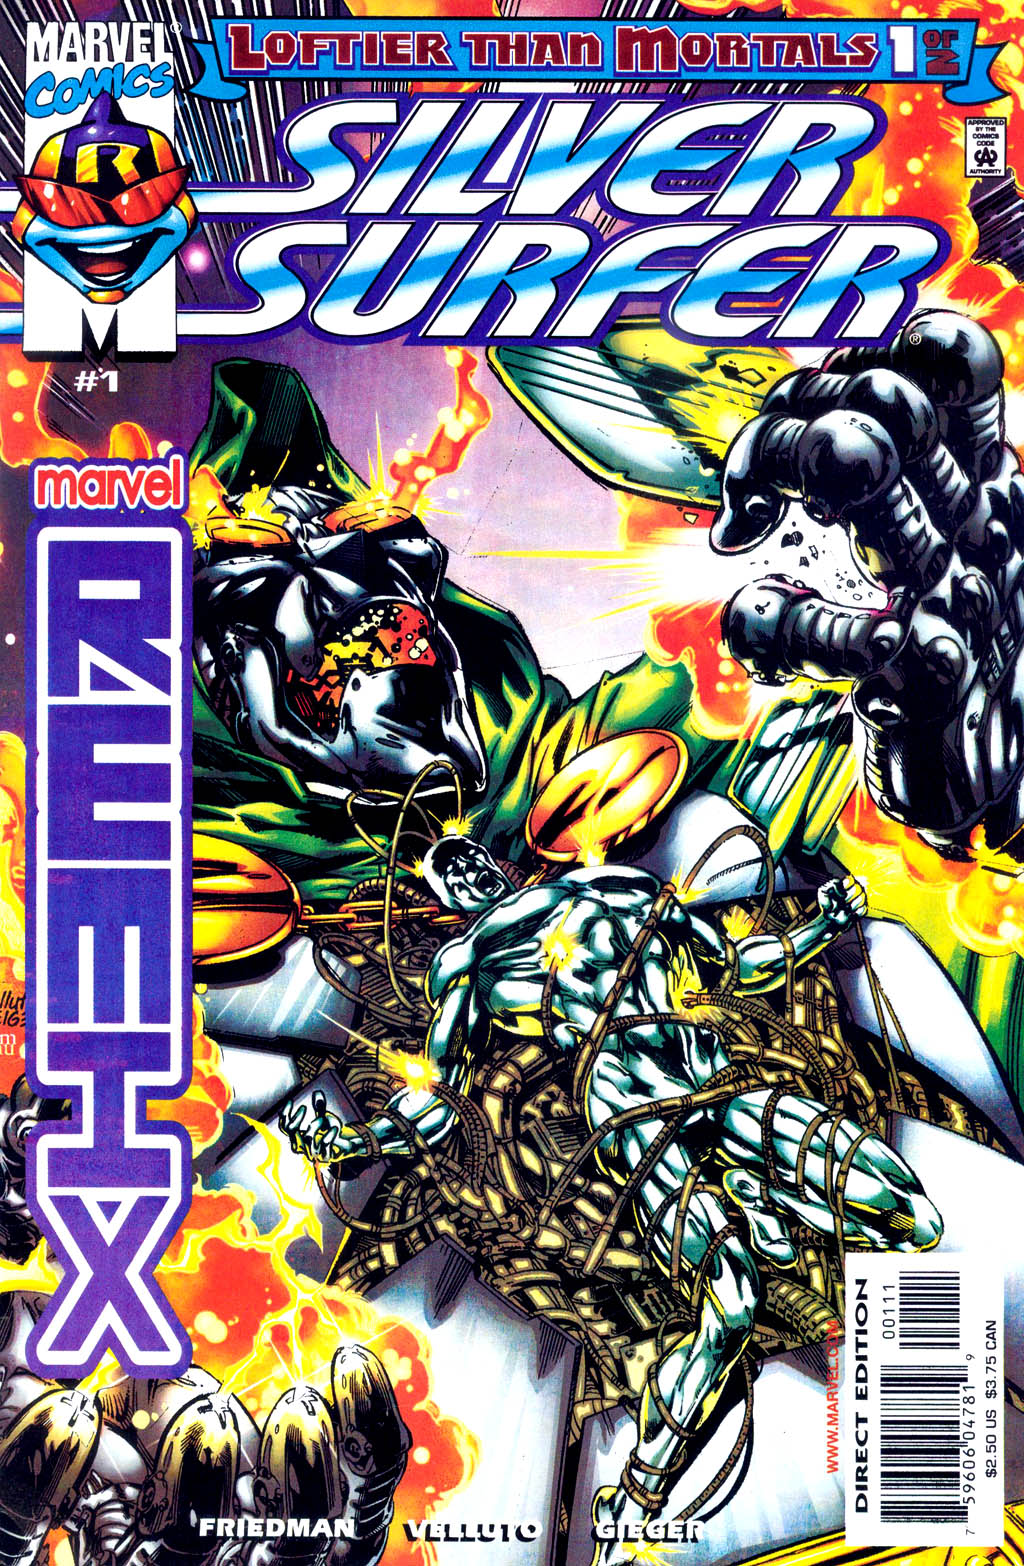 Read online Silver Surfer: Loftier Than Mortals comic -  Issue #1 - 1